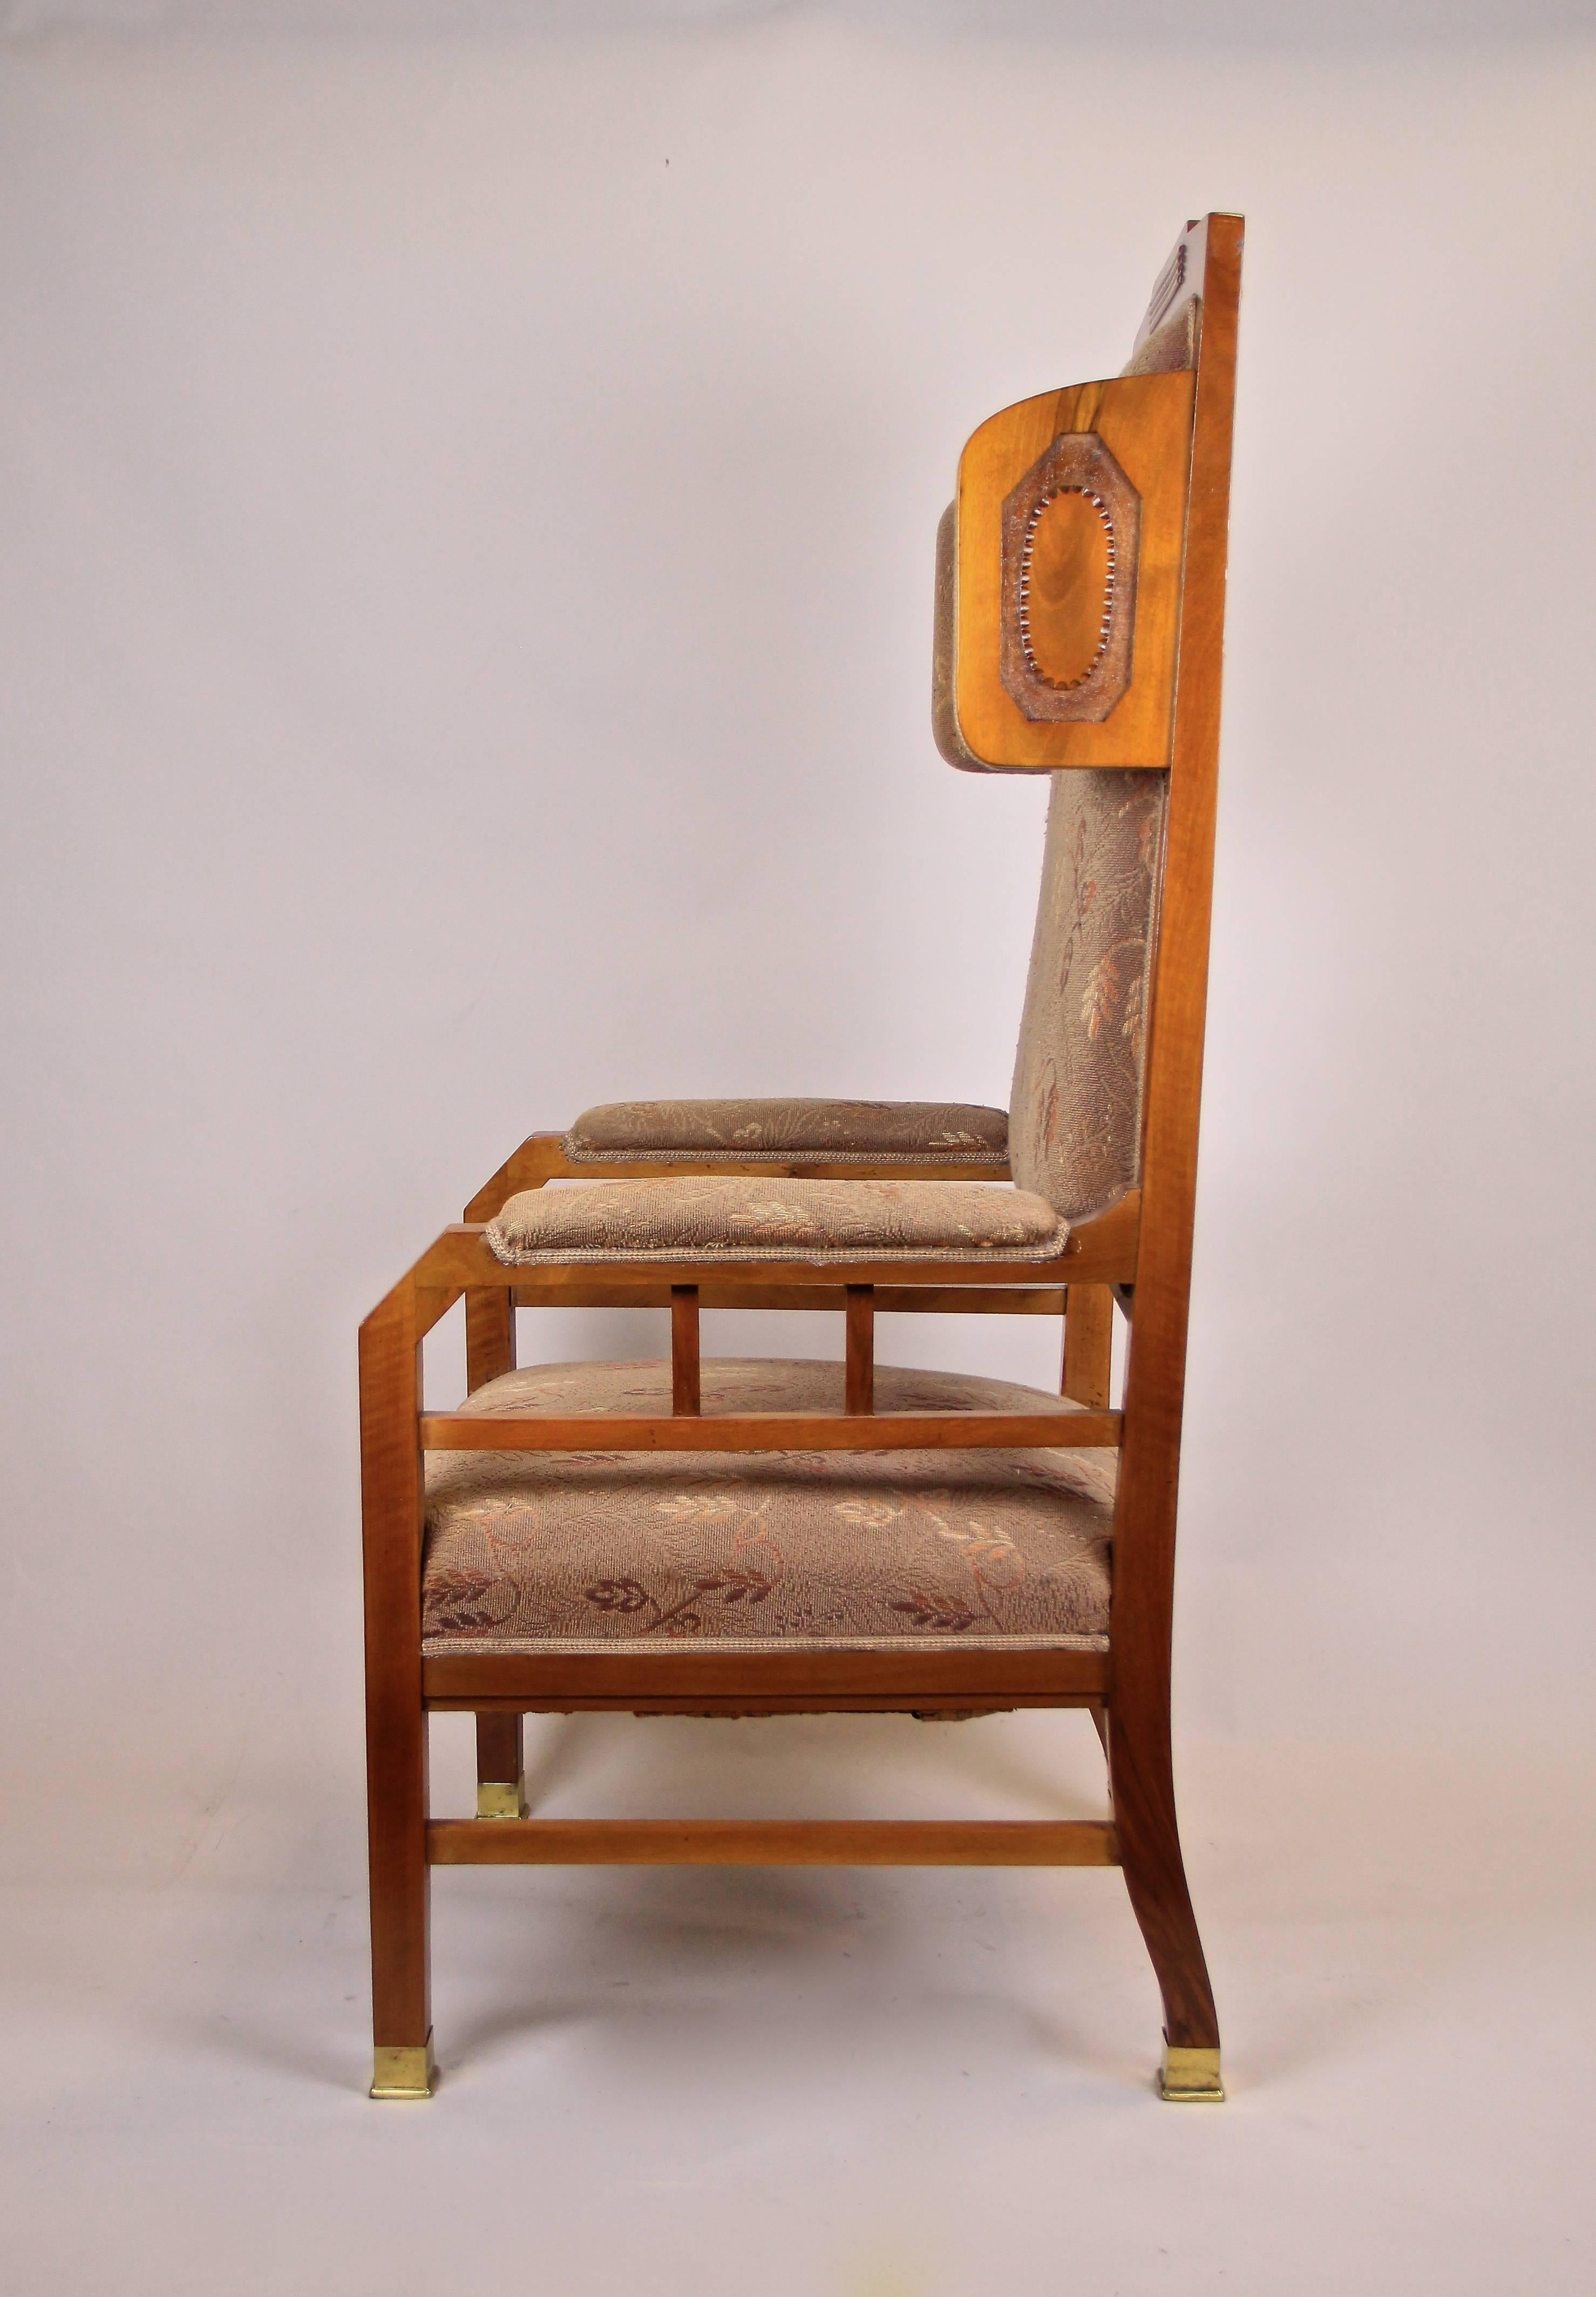 Brass Art Nouveau Wing Chair Nut Wood with Original Upholstery, Austria, circa 1905